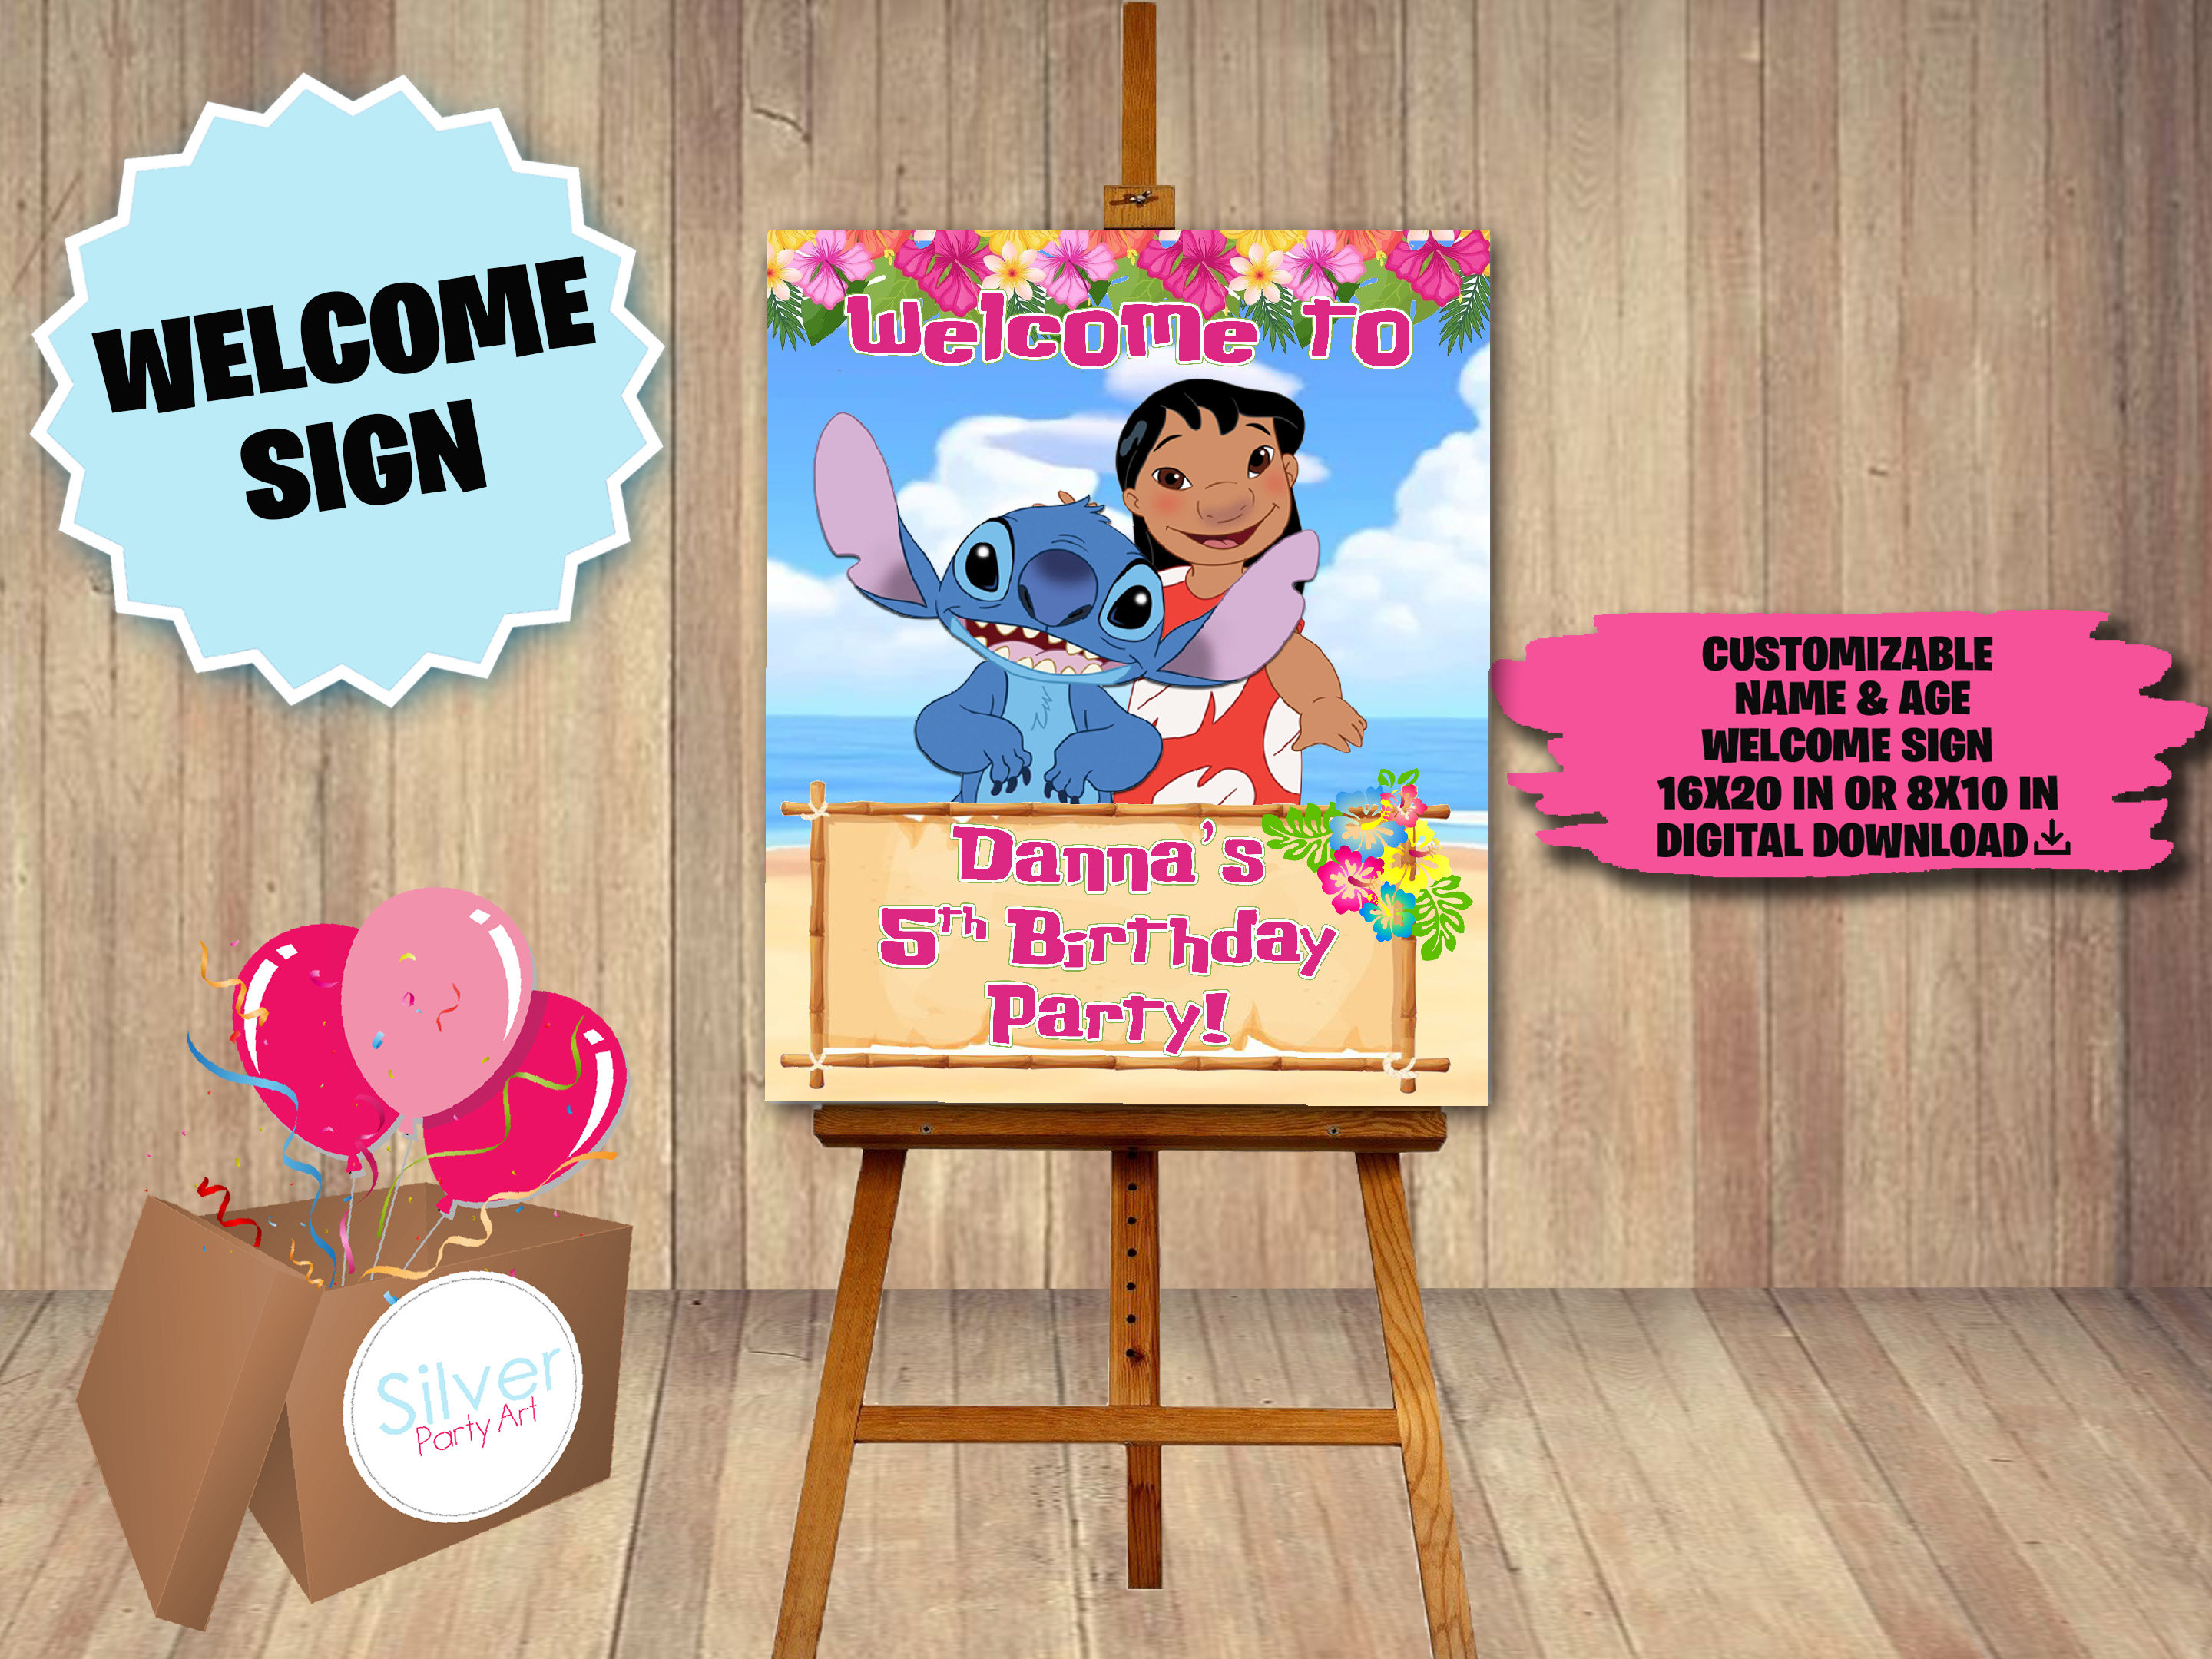 Stitch Invitation, Stitch Birthday Invites, Instant Download Ninja Party  Invitations, Stitch, Digital Birthday Party Editable Invitation 